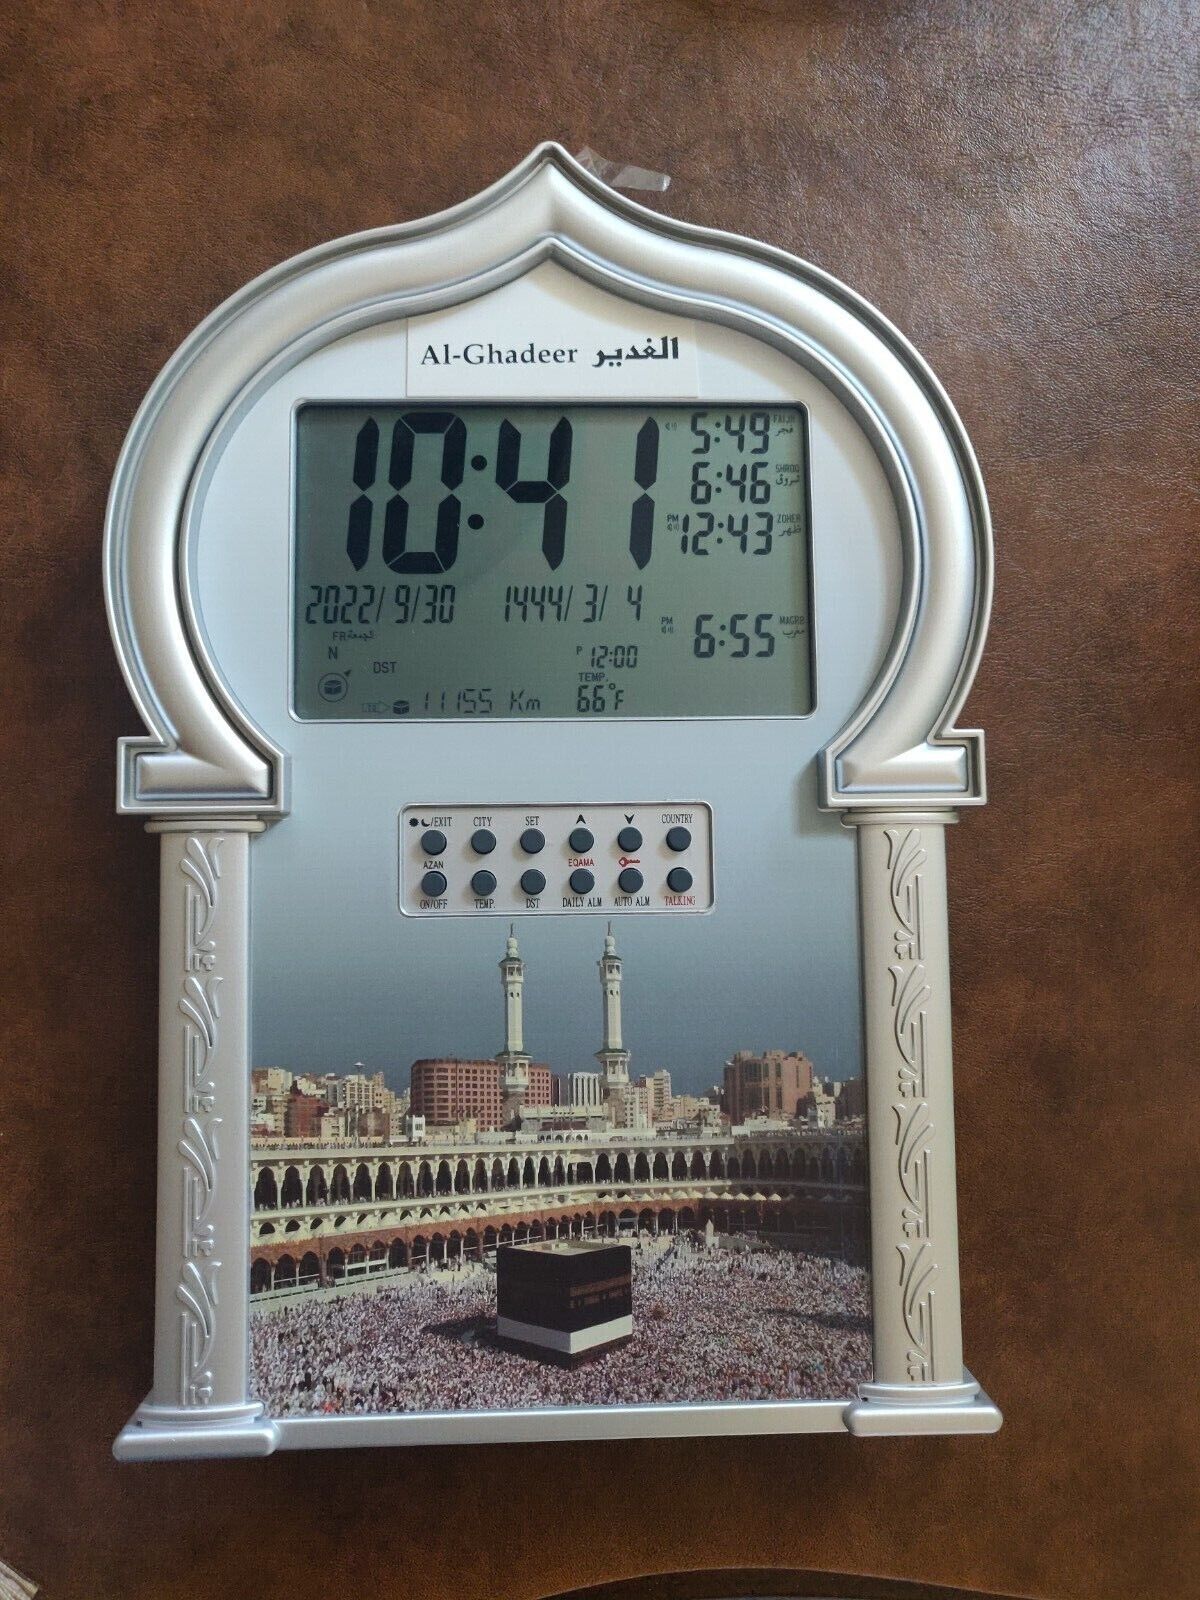 Shia Azan Wall Clock - Al-Ghadeer - Limited Quantities Available